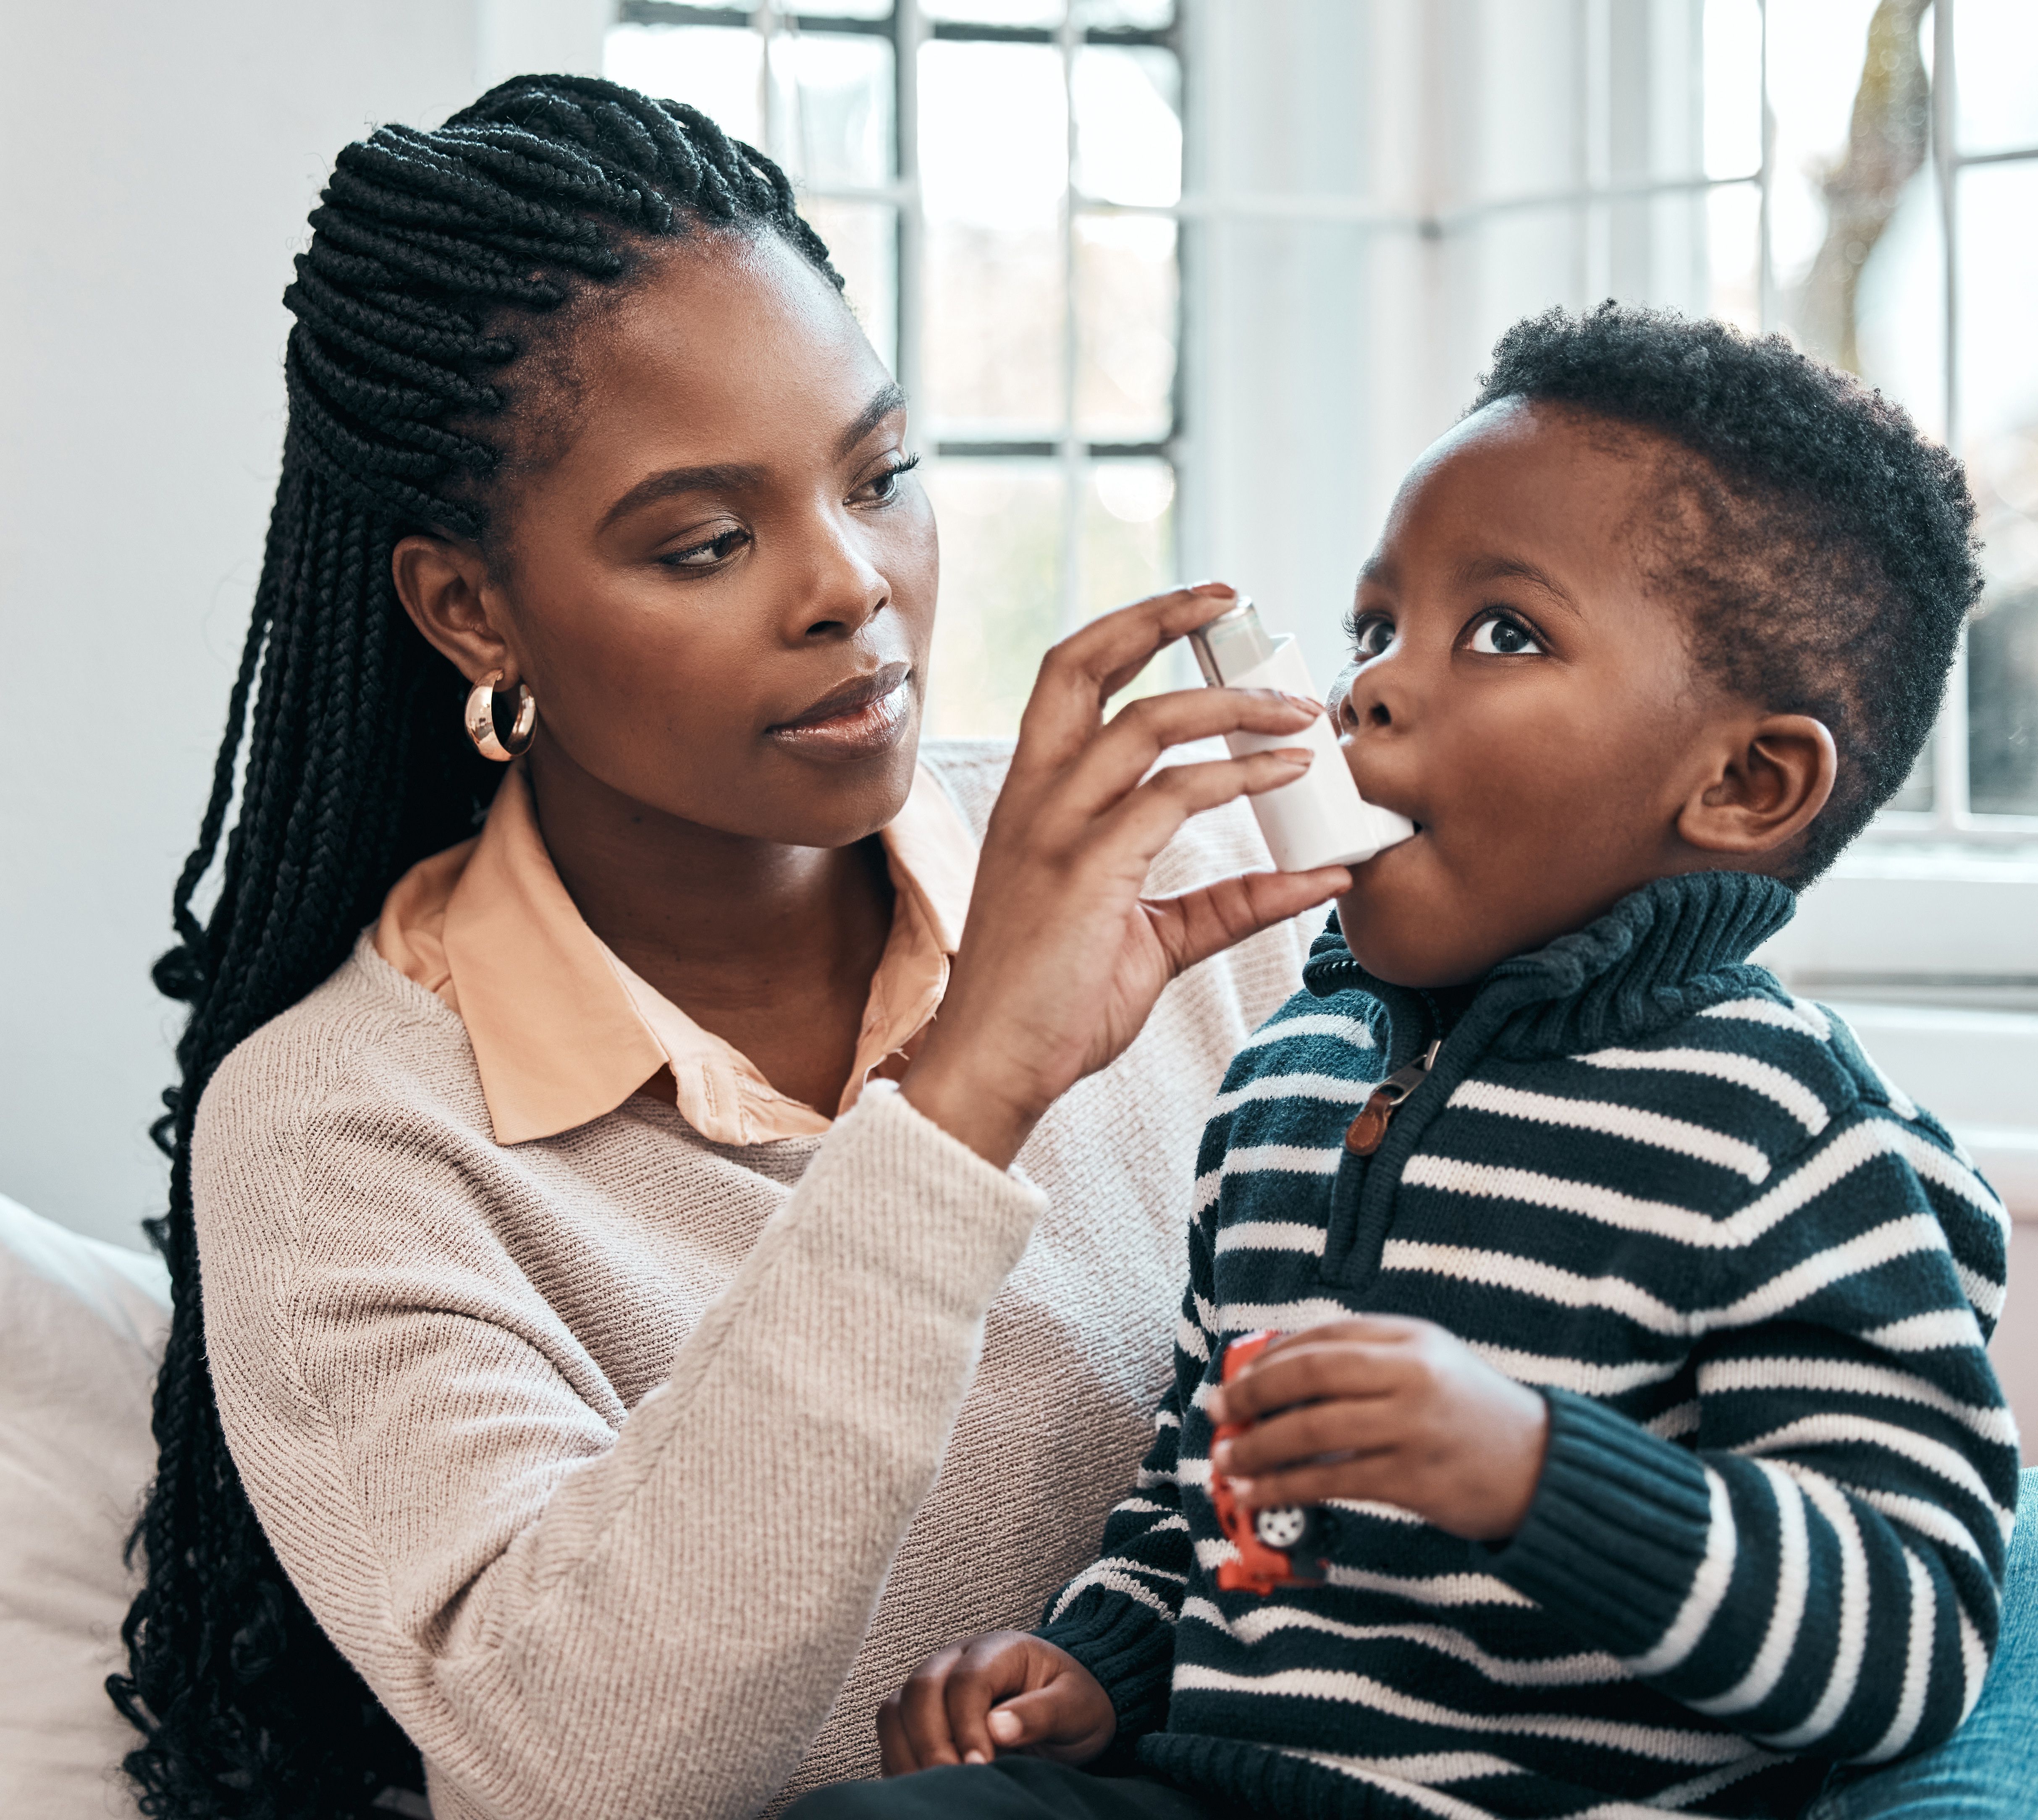 Woman helps child with inhaler | peopleimages.com - stock.adobe.com